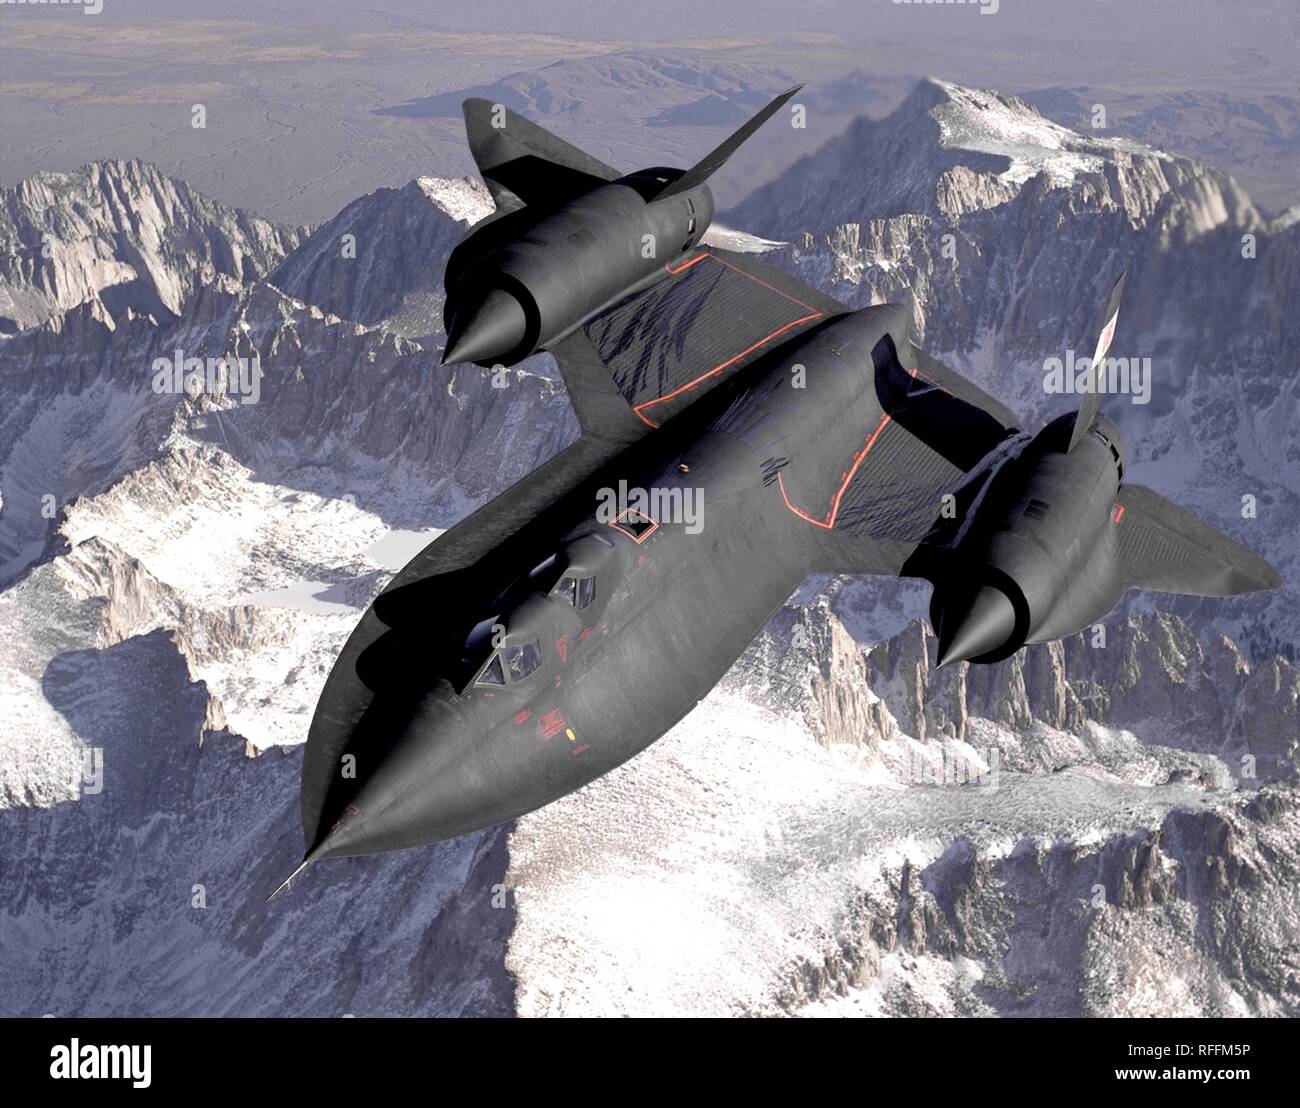 supersonic-fighter-63211.jpg - RFFM5P Stock Photo